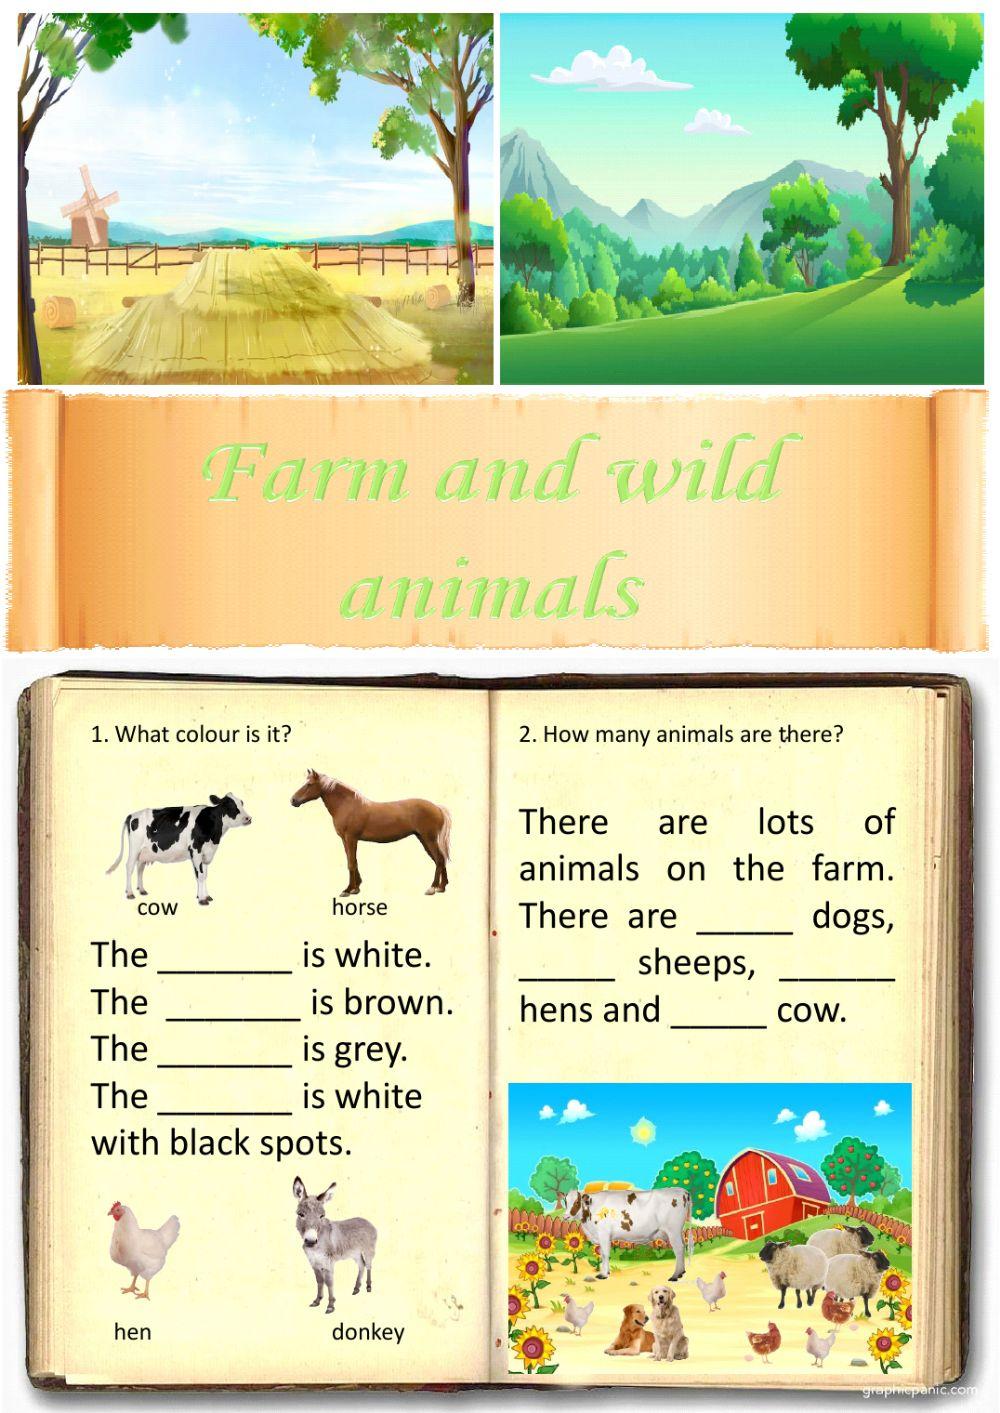 Farm and wild animals